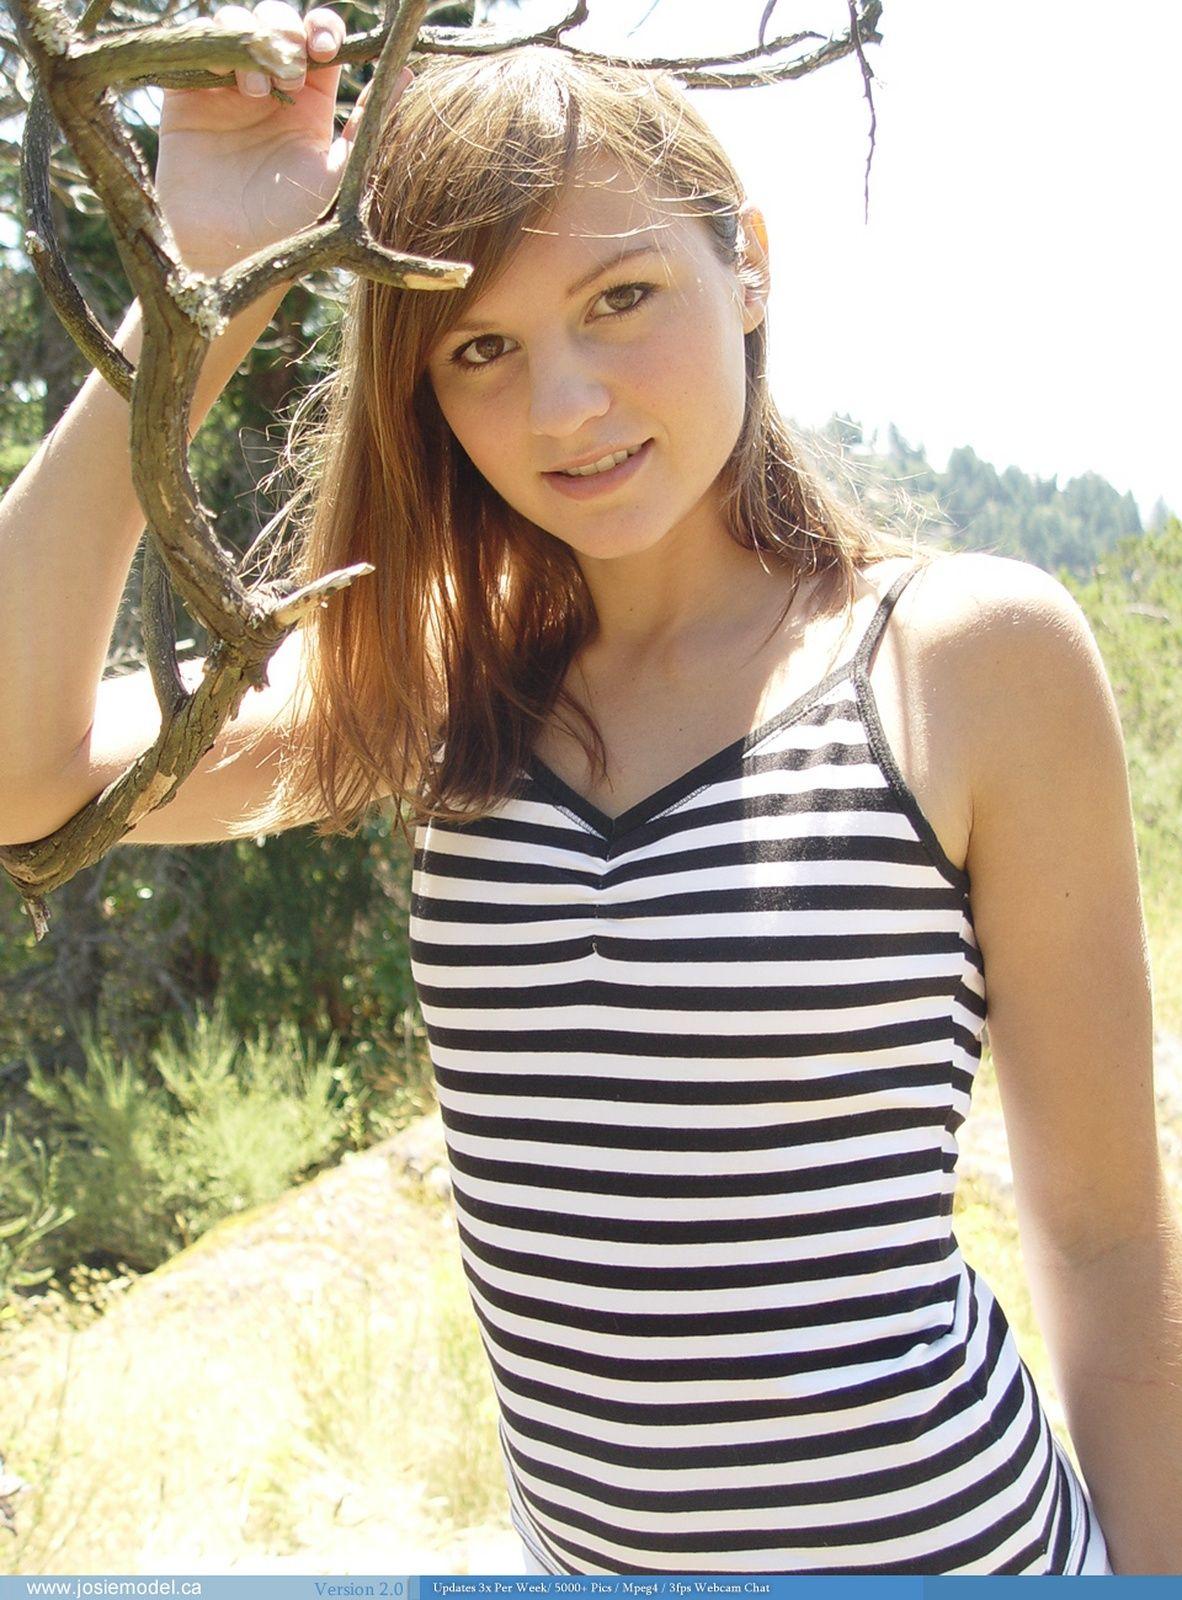 Pictures of teen hottie Josie Model showing her hotness outside #55697217